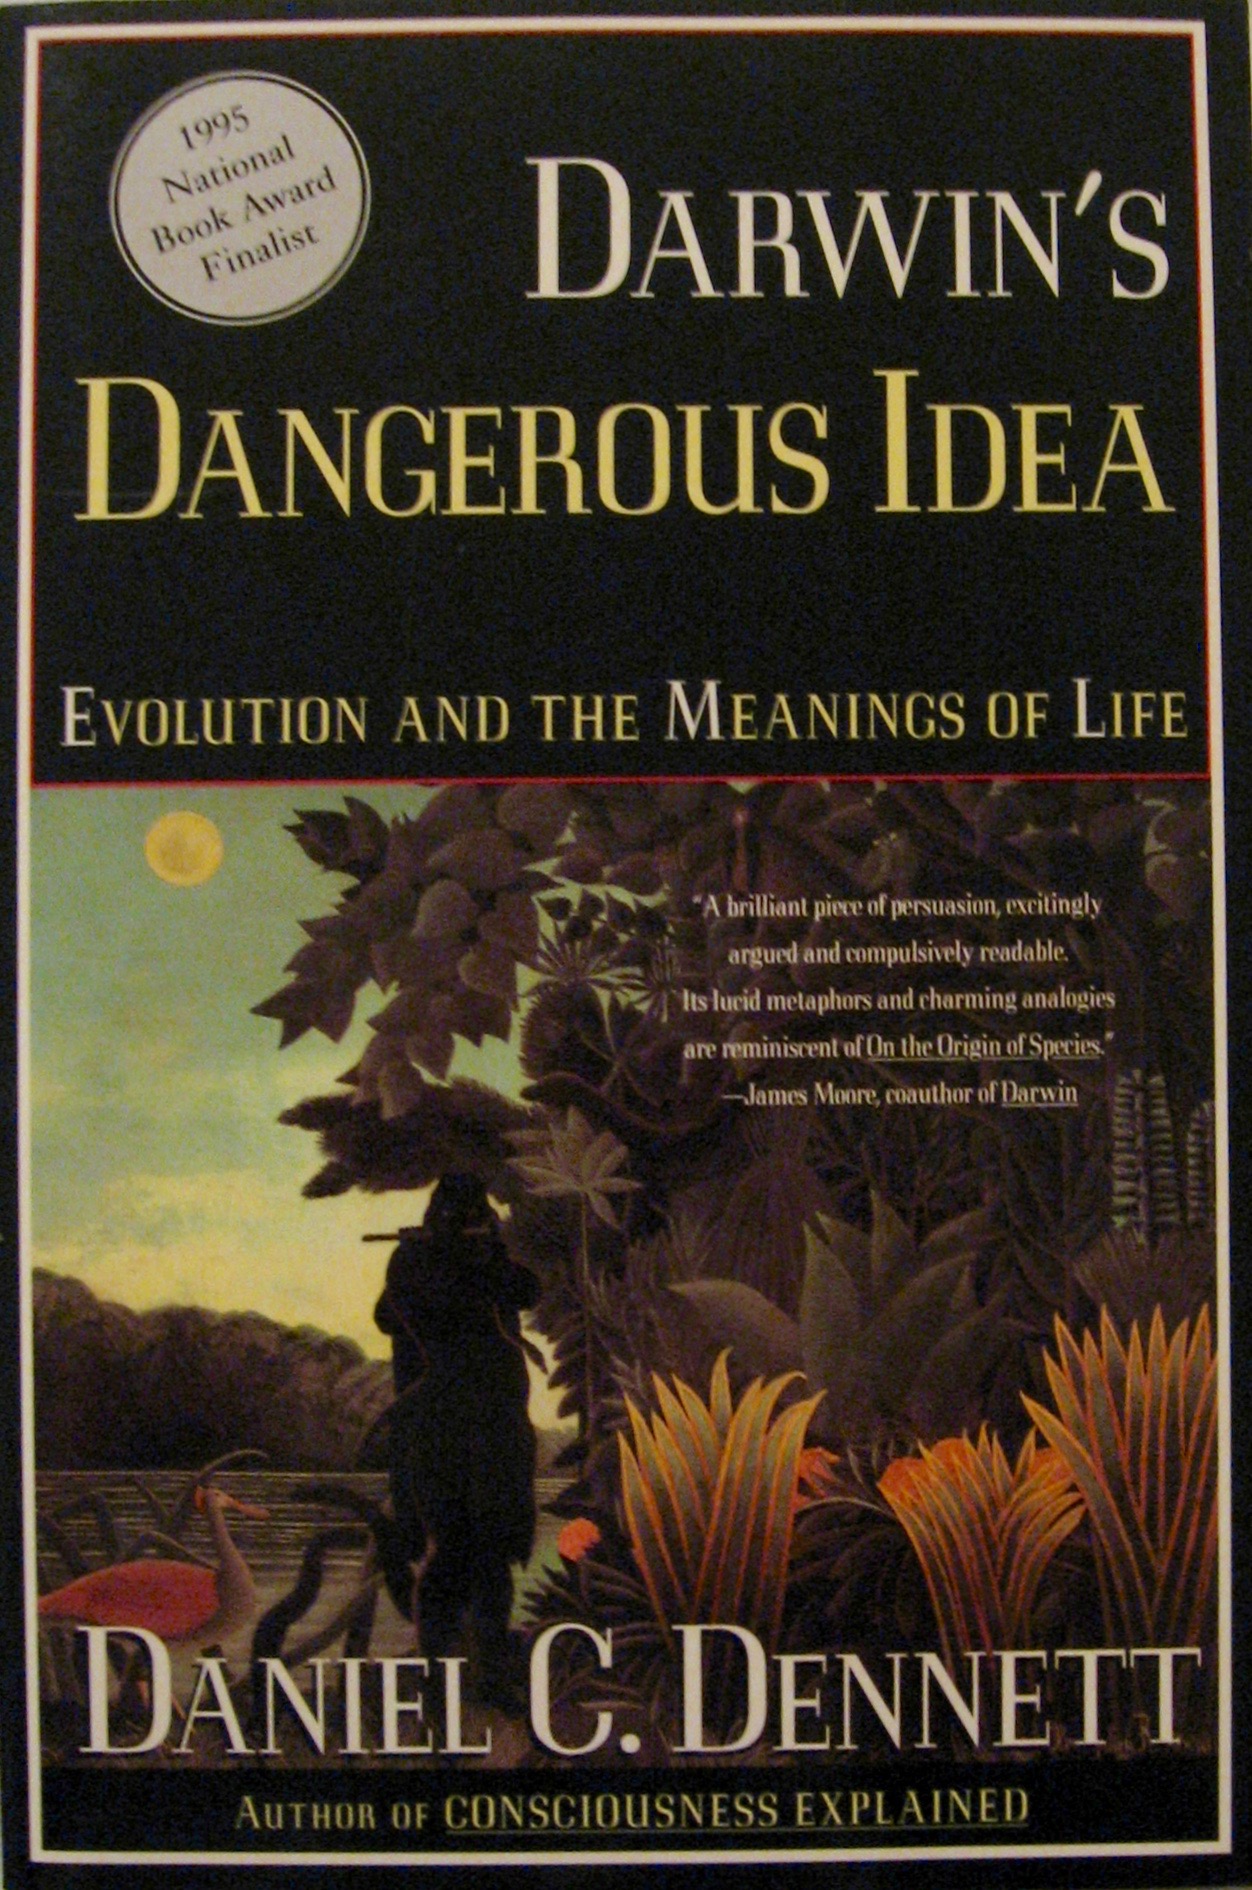 Darwin s Dangerous Idea